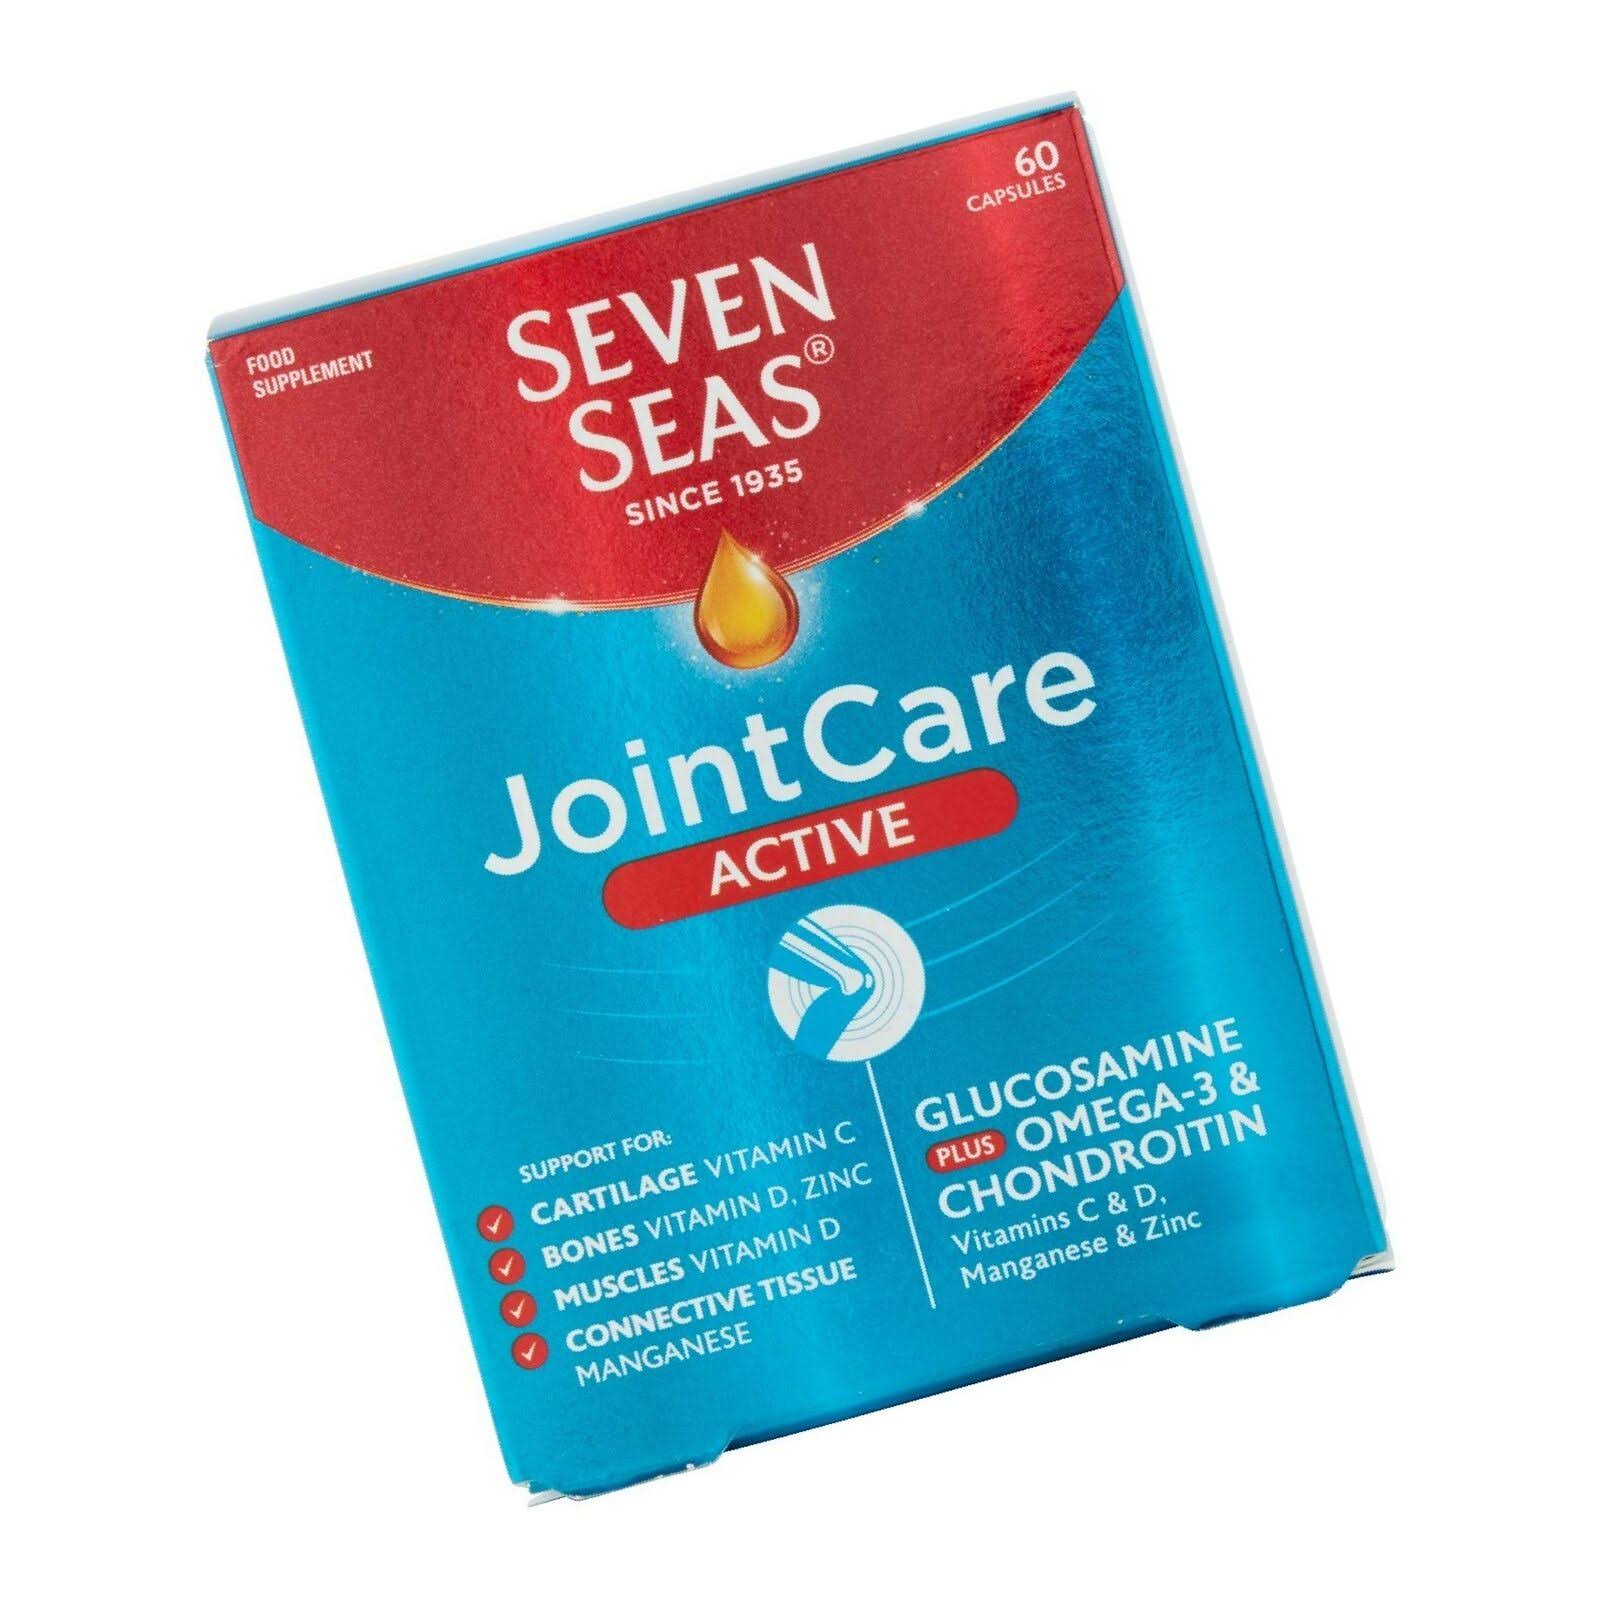 Seven Seas JointCare Active Food Supplement - 60pk